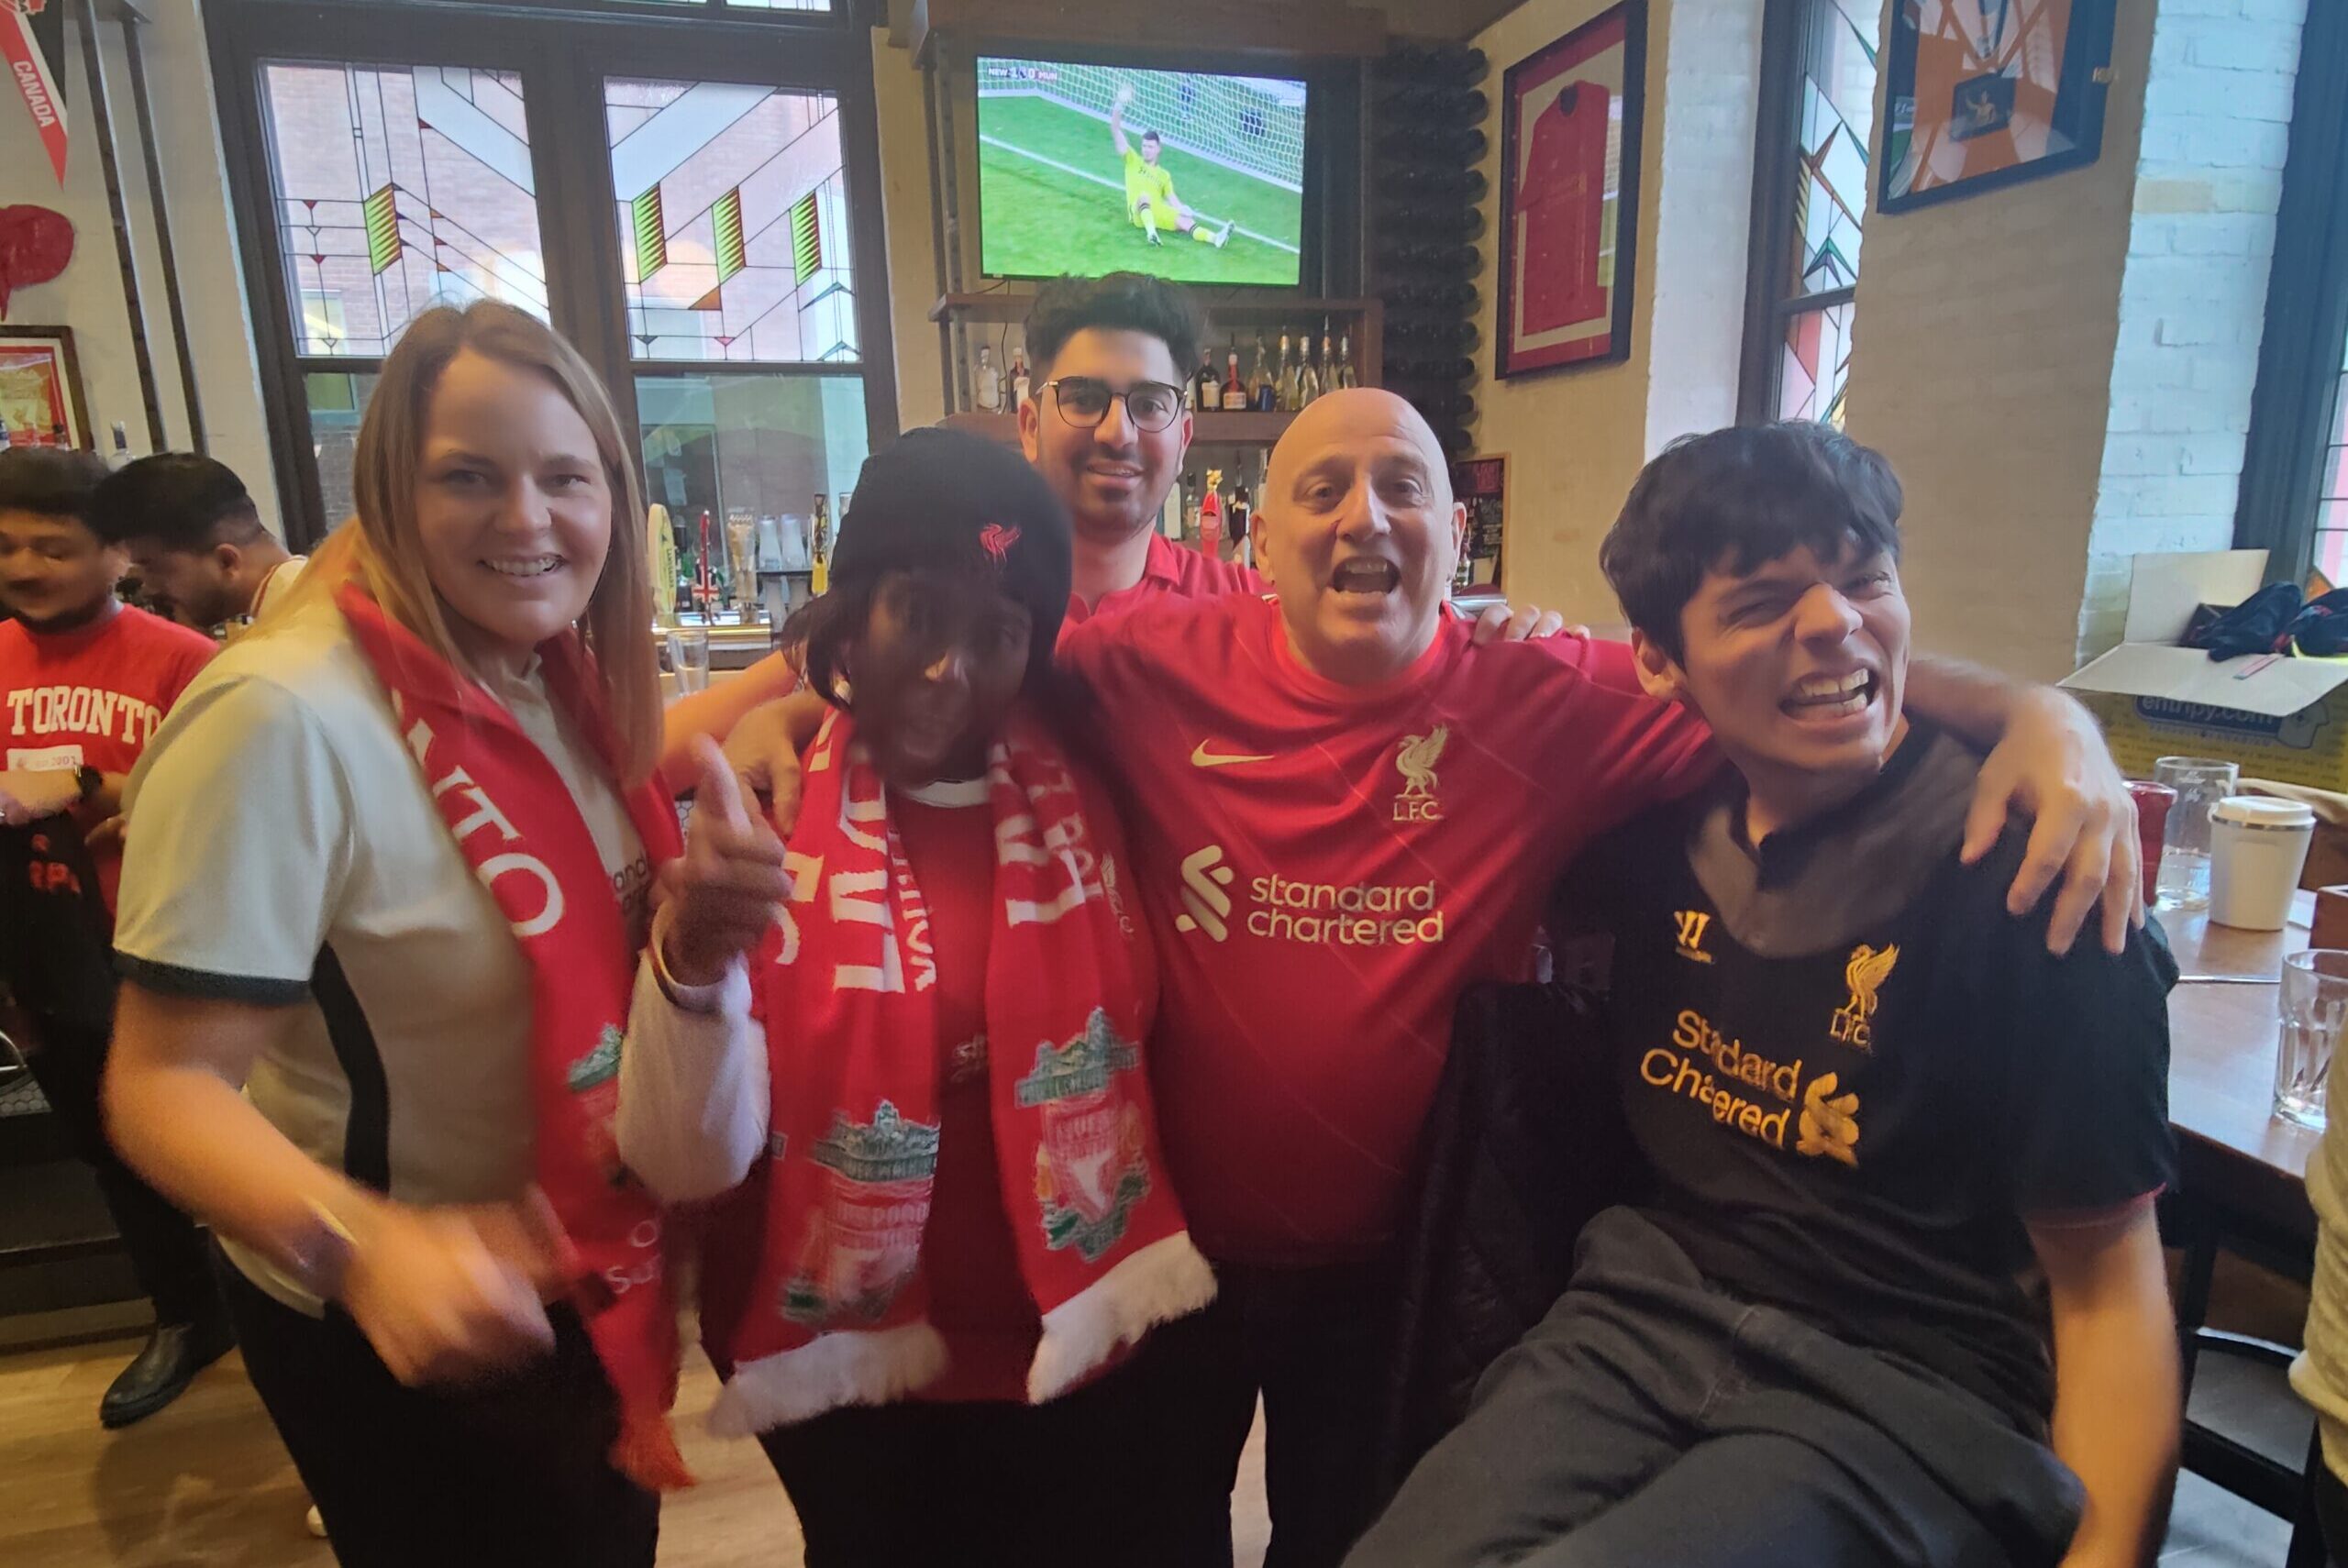 LFC Fans at Liverpool FC Fan Club Pub in Toronto